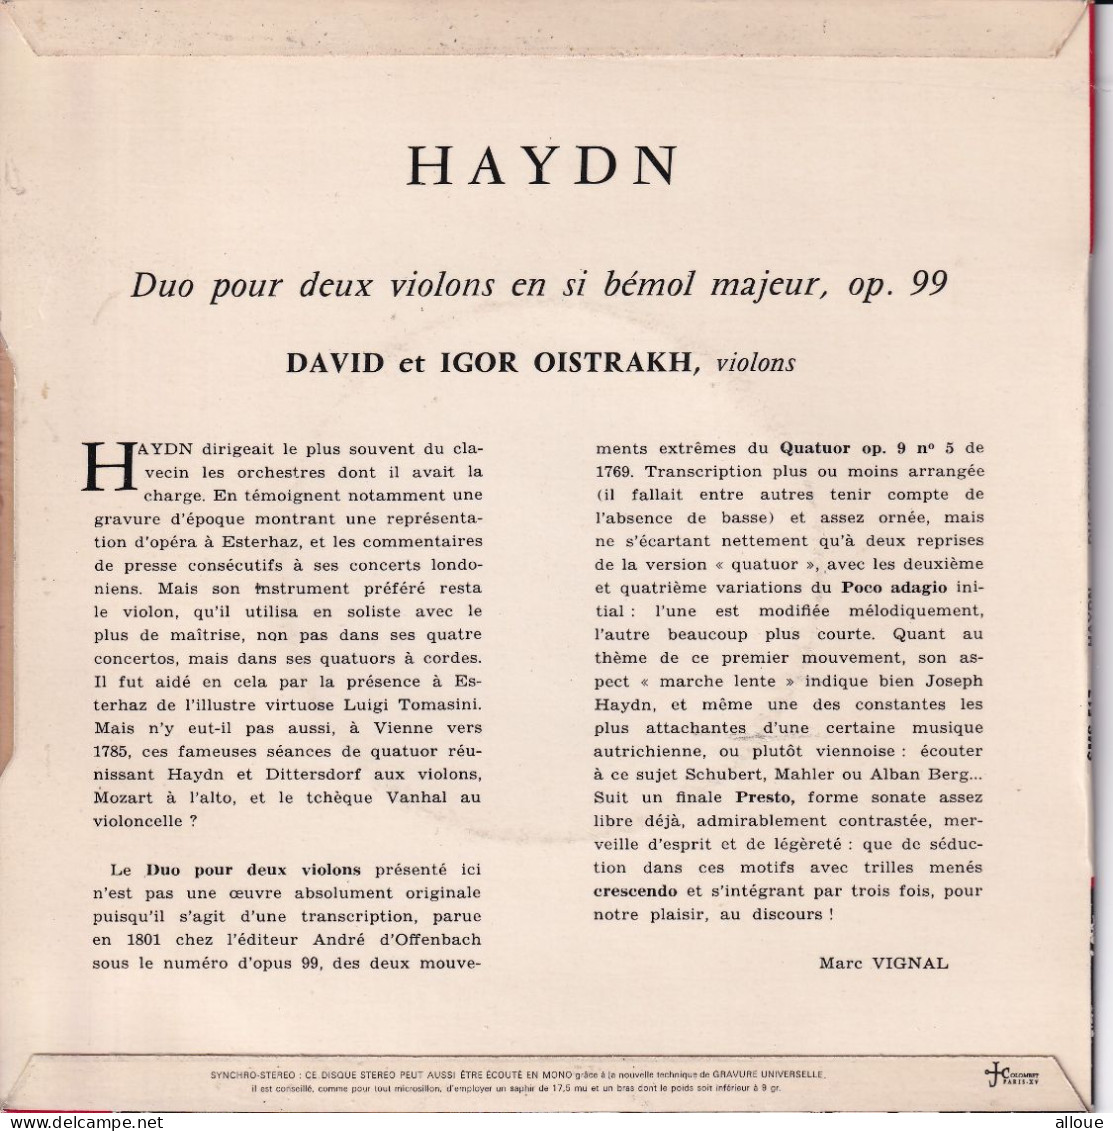 DAVID & IGOR OISTRAKH JOUENT HAYDN - FR EP - DUO POUR DEUX VIOLONS EN SI BEMOL MAJEUR, OP. 99 - Klassiekers